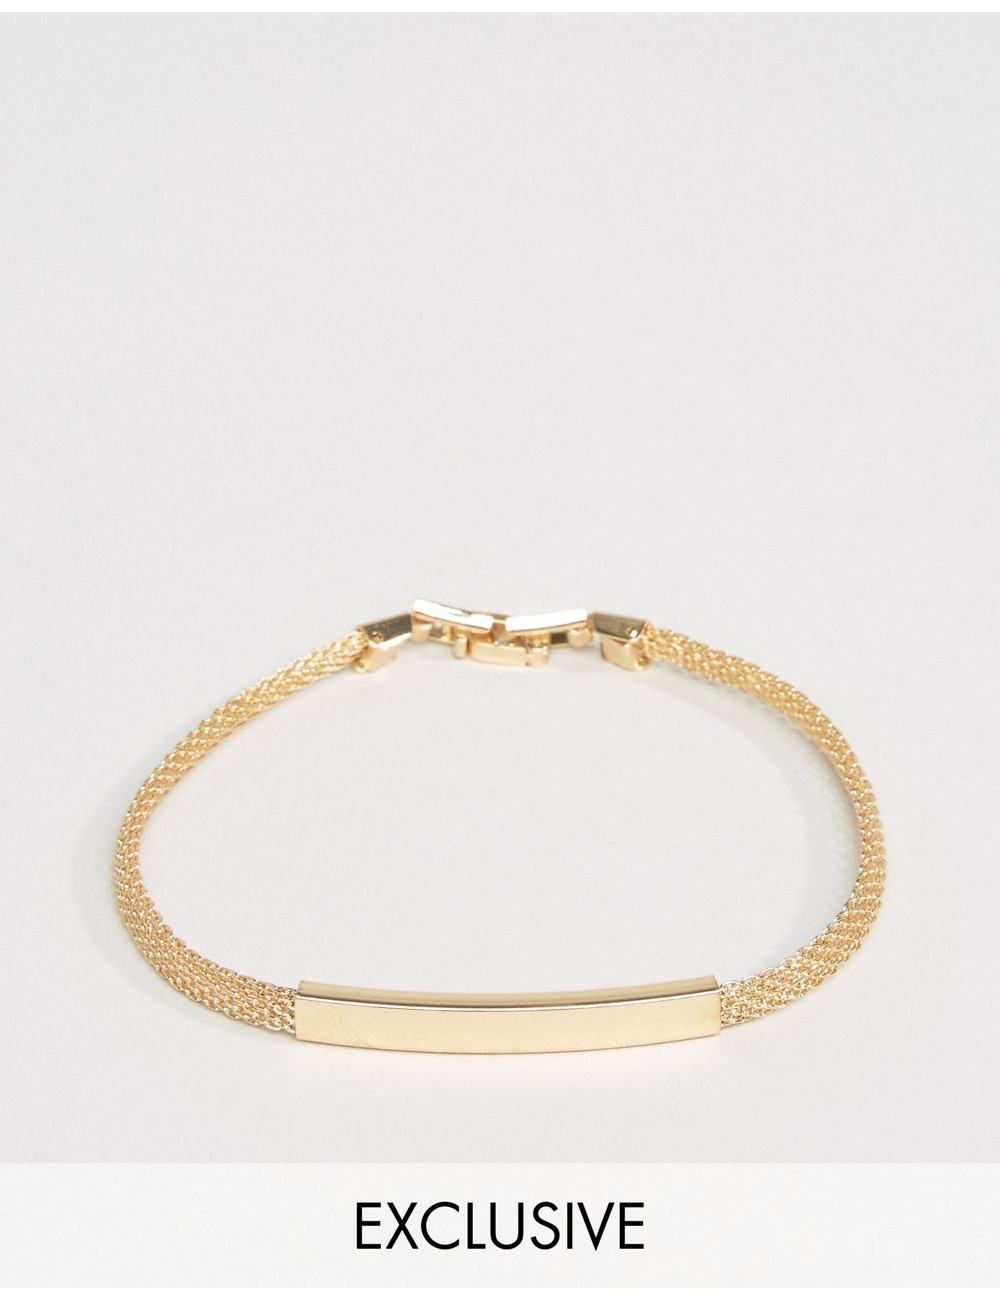 DesignB chain id bracelet...